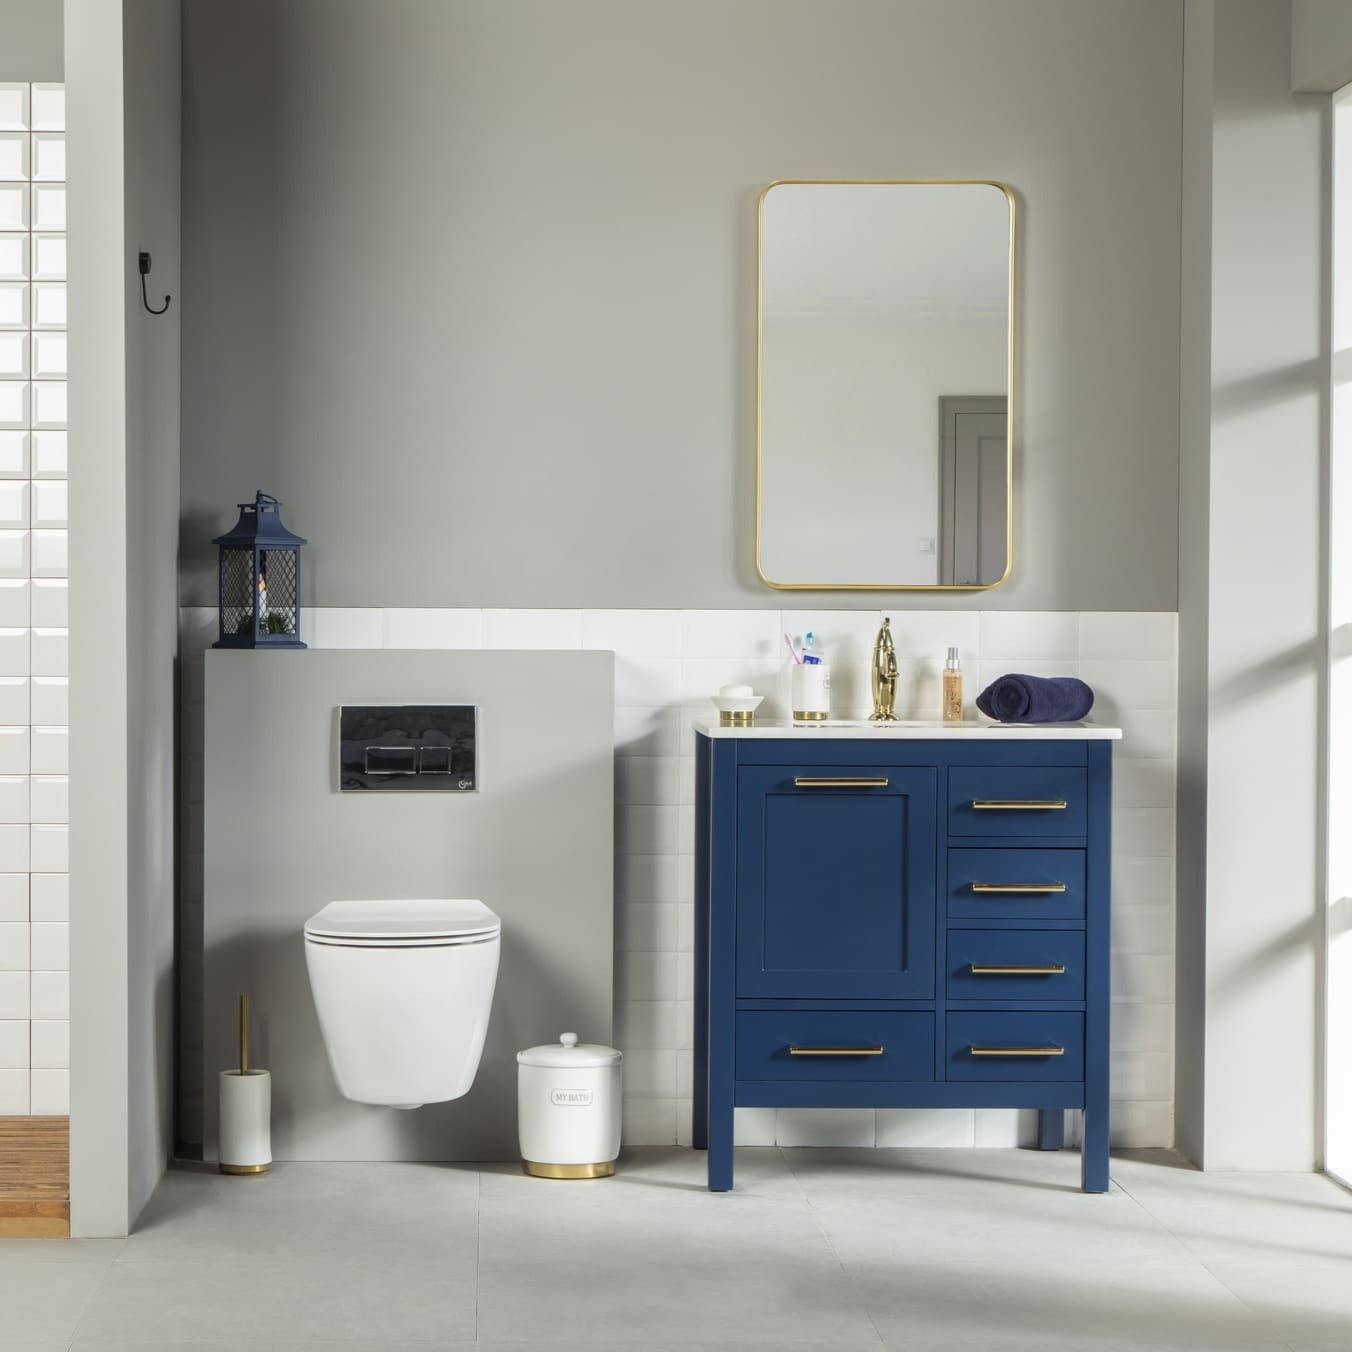 Ahley Bathroom Vanity Homelero 30"  #size_30"  #color_blue  #hardware_brass